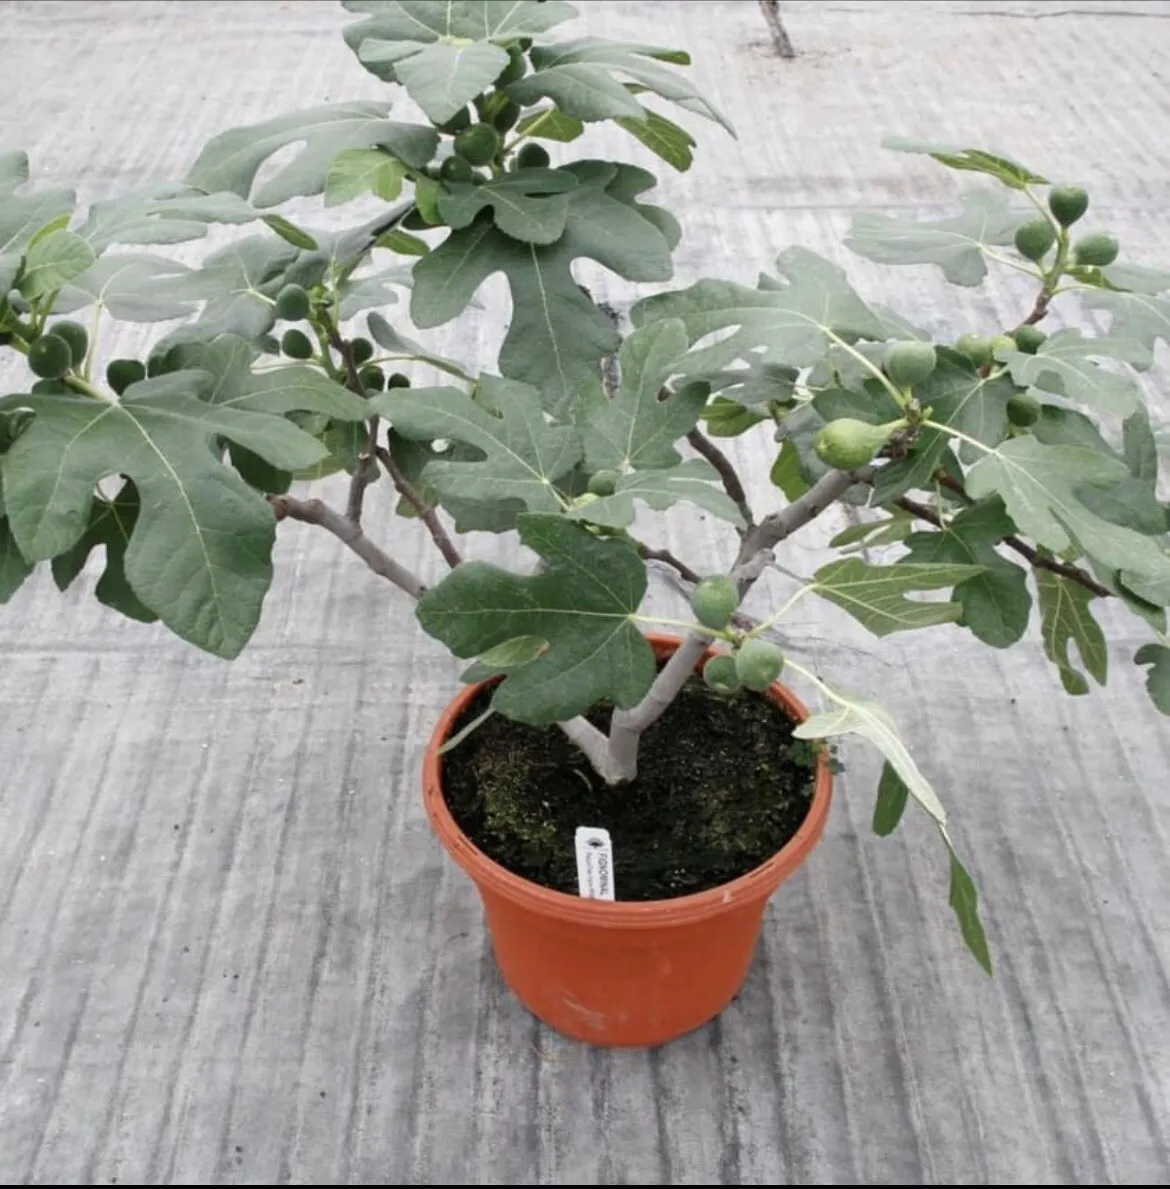 1 Fig Tree “Fignomenal” New Dwarf Variety - $31.44